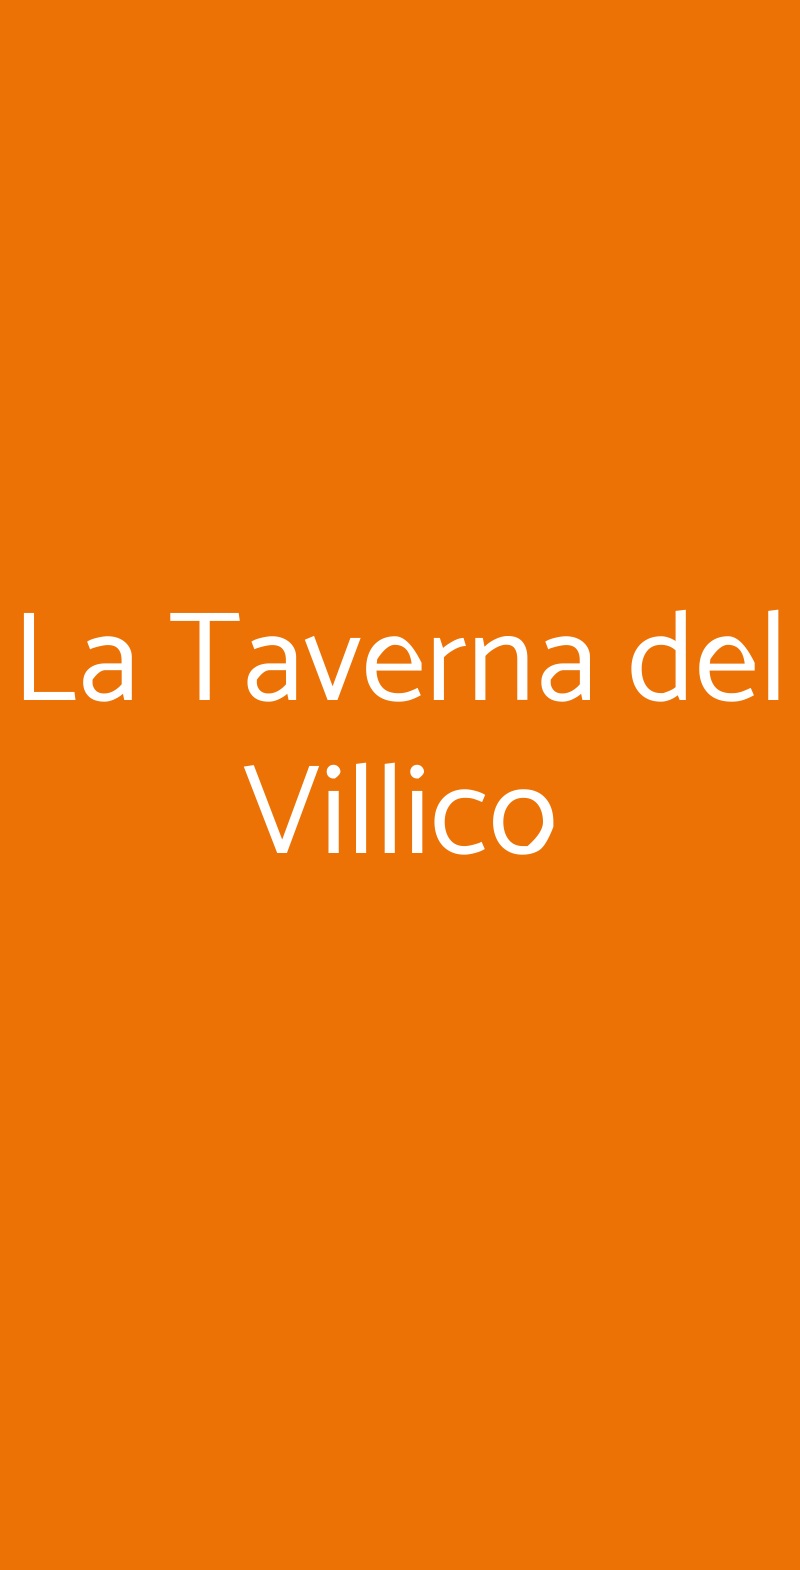 La Taverna del Villico Canossa menù 1 pagina